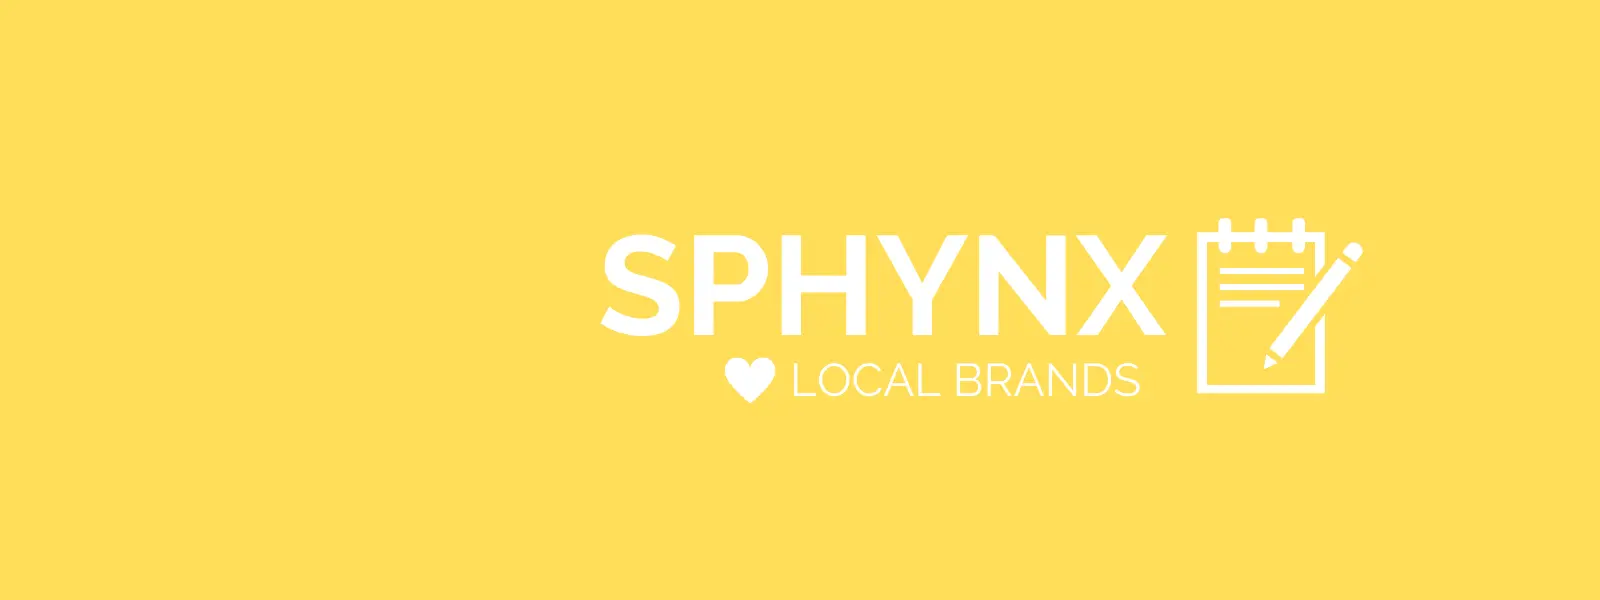 sphynx loves local brands